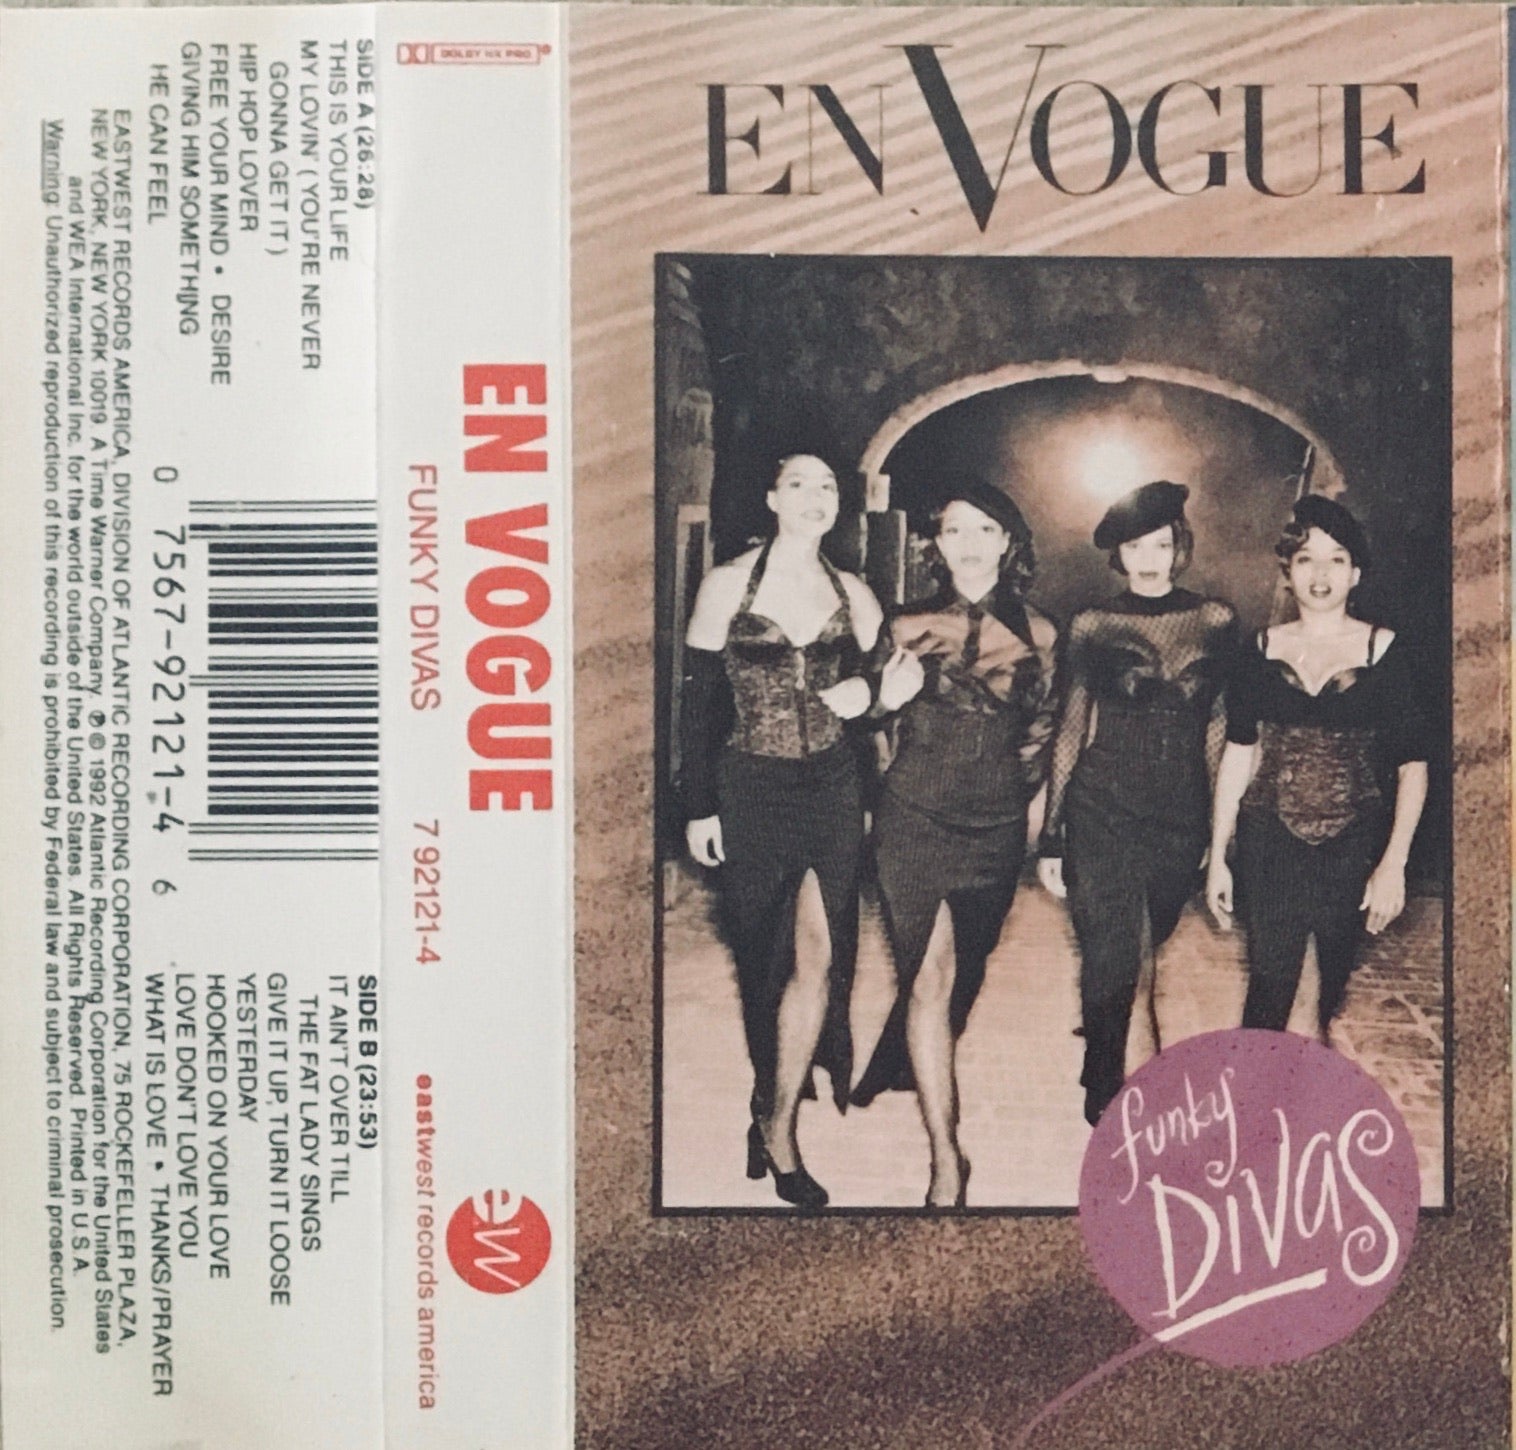 En Vogue “Funky Divas” CS (1992)